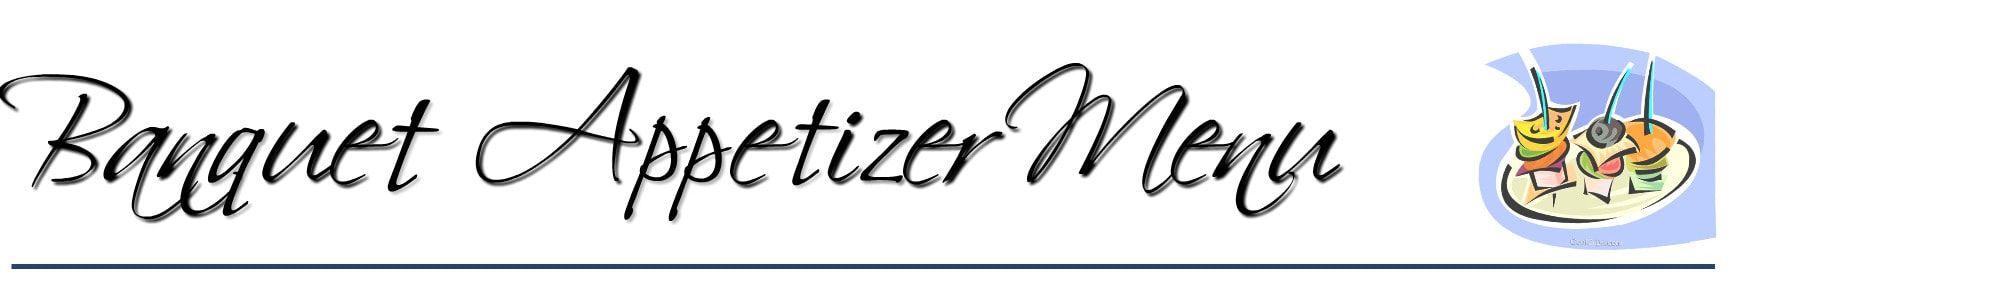 Appetizers Logo - Banquet Appetizers - Mykels Restaurant & Lounge